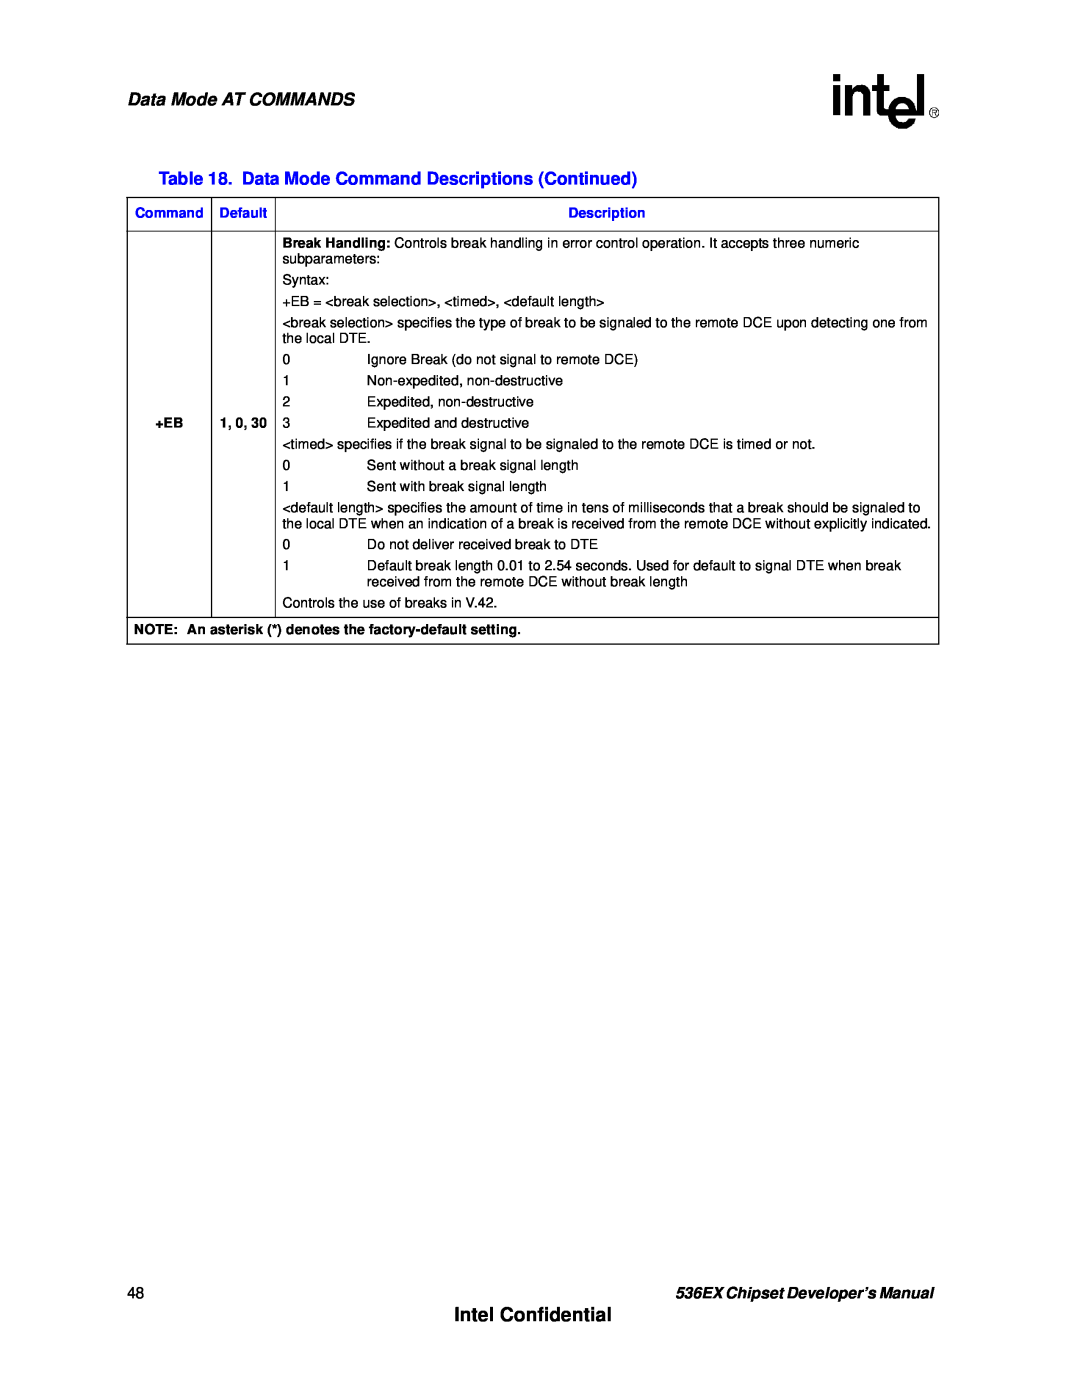 Intel manual Intel Confidential, Data Mode AT COMMANDS, 1, 0, 536EX Chipset Developer’s Manual 